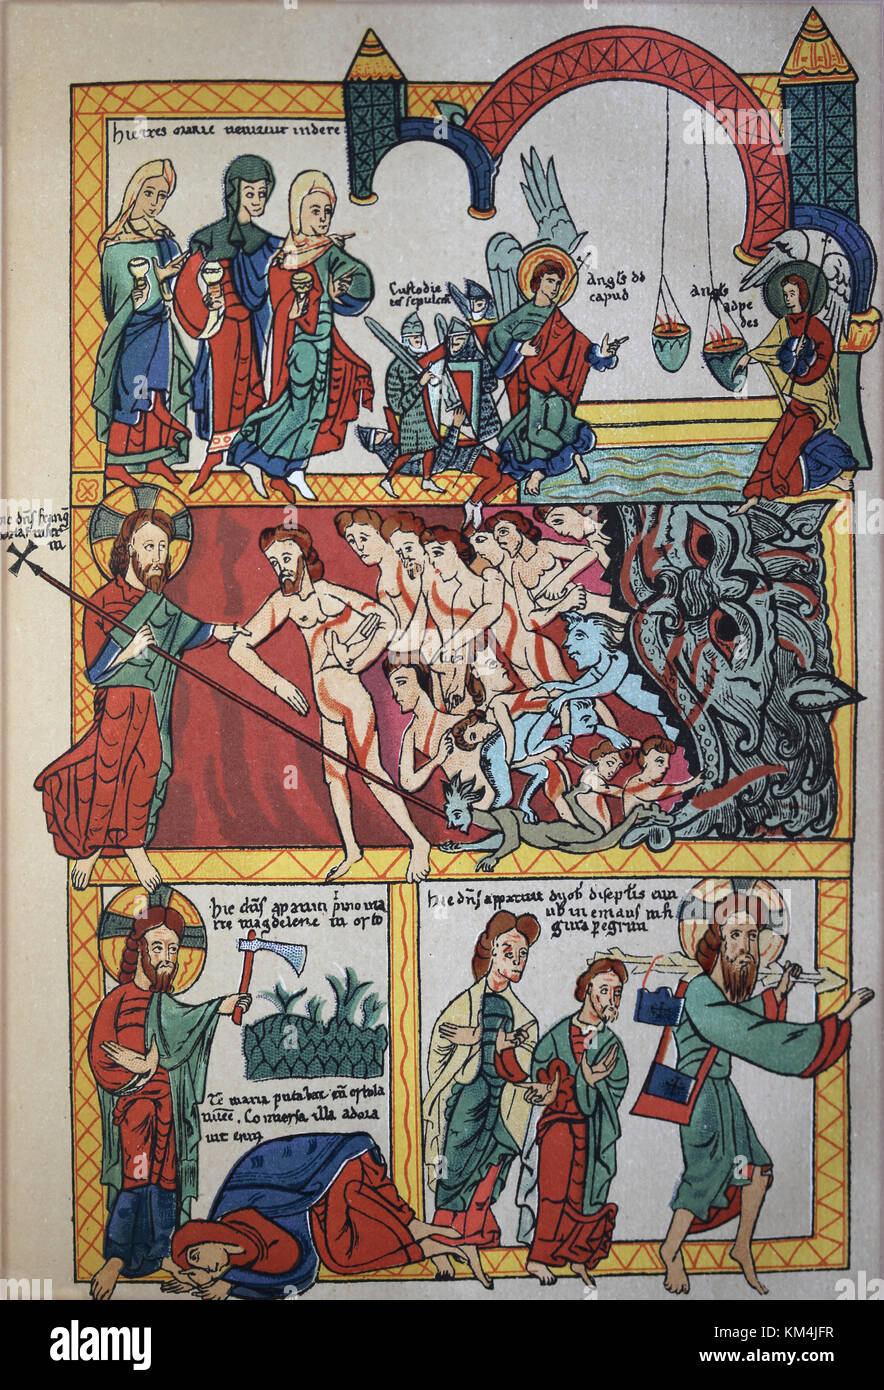 Bibel von Avila, Spanien. Codice des XII. Jahrhunderts. Romanisch. Replikat. Stich, 19. Jahrhundert. Stockfoto